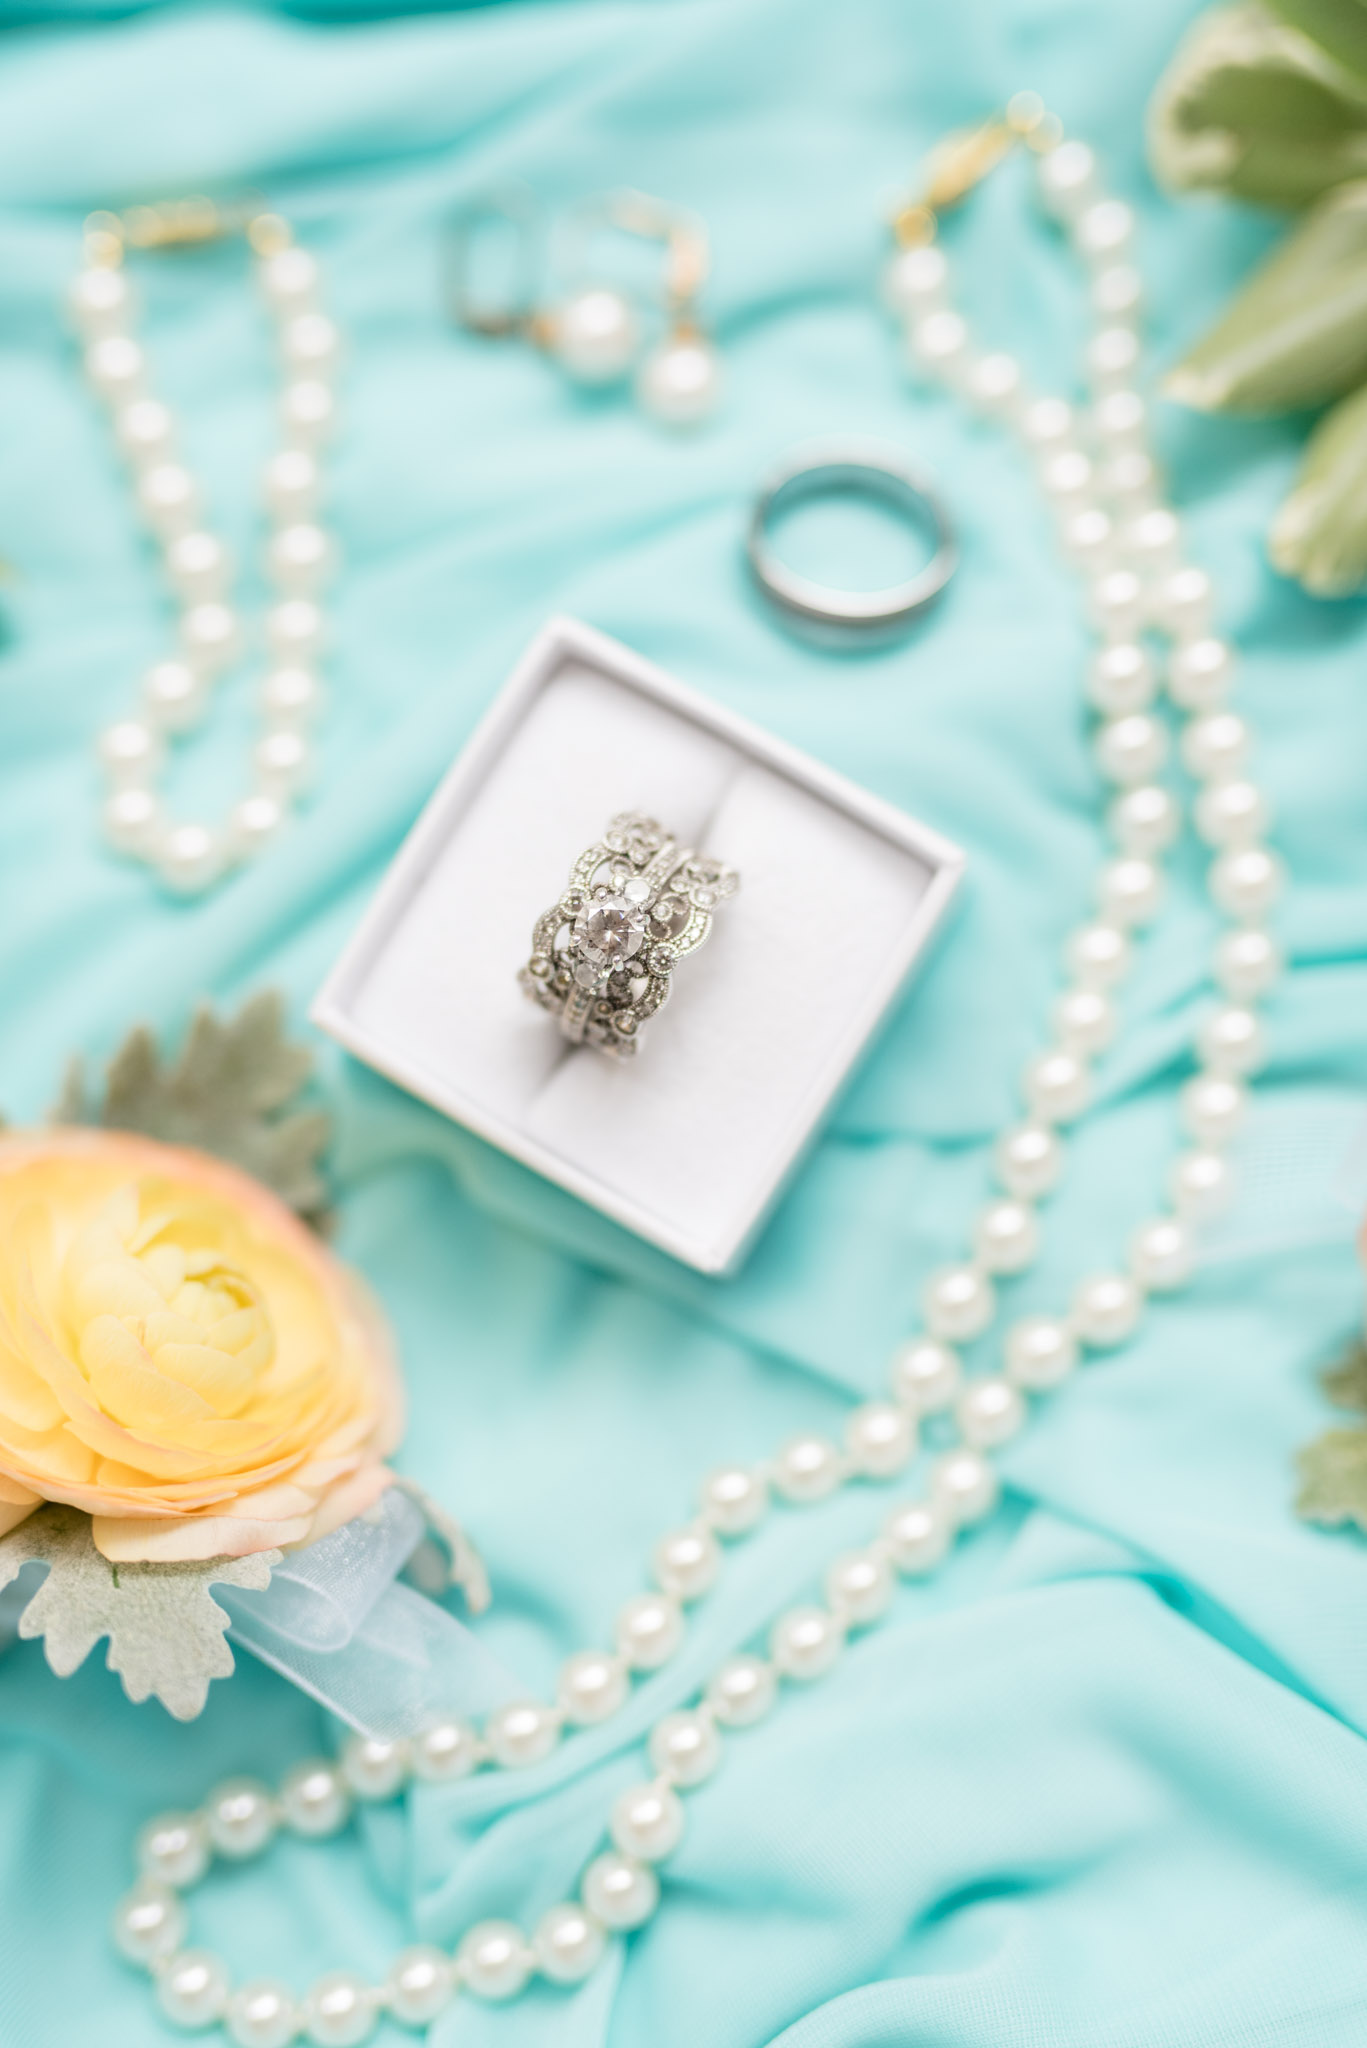 Wedding ring sits on spa blue bridesmaid dress.